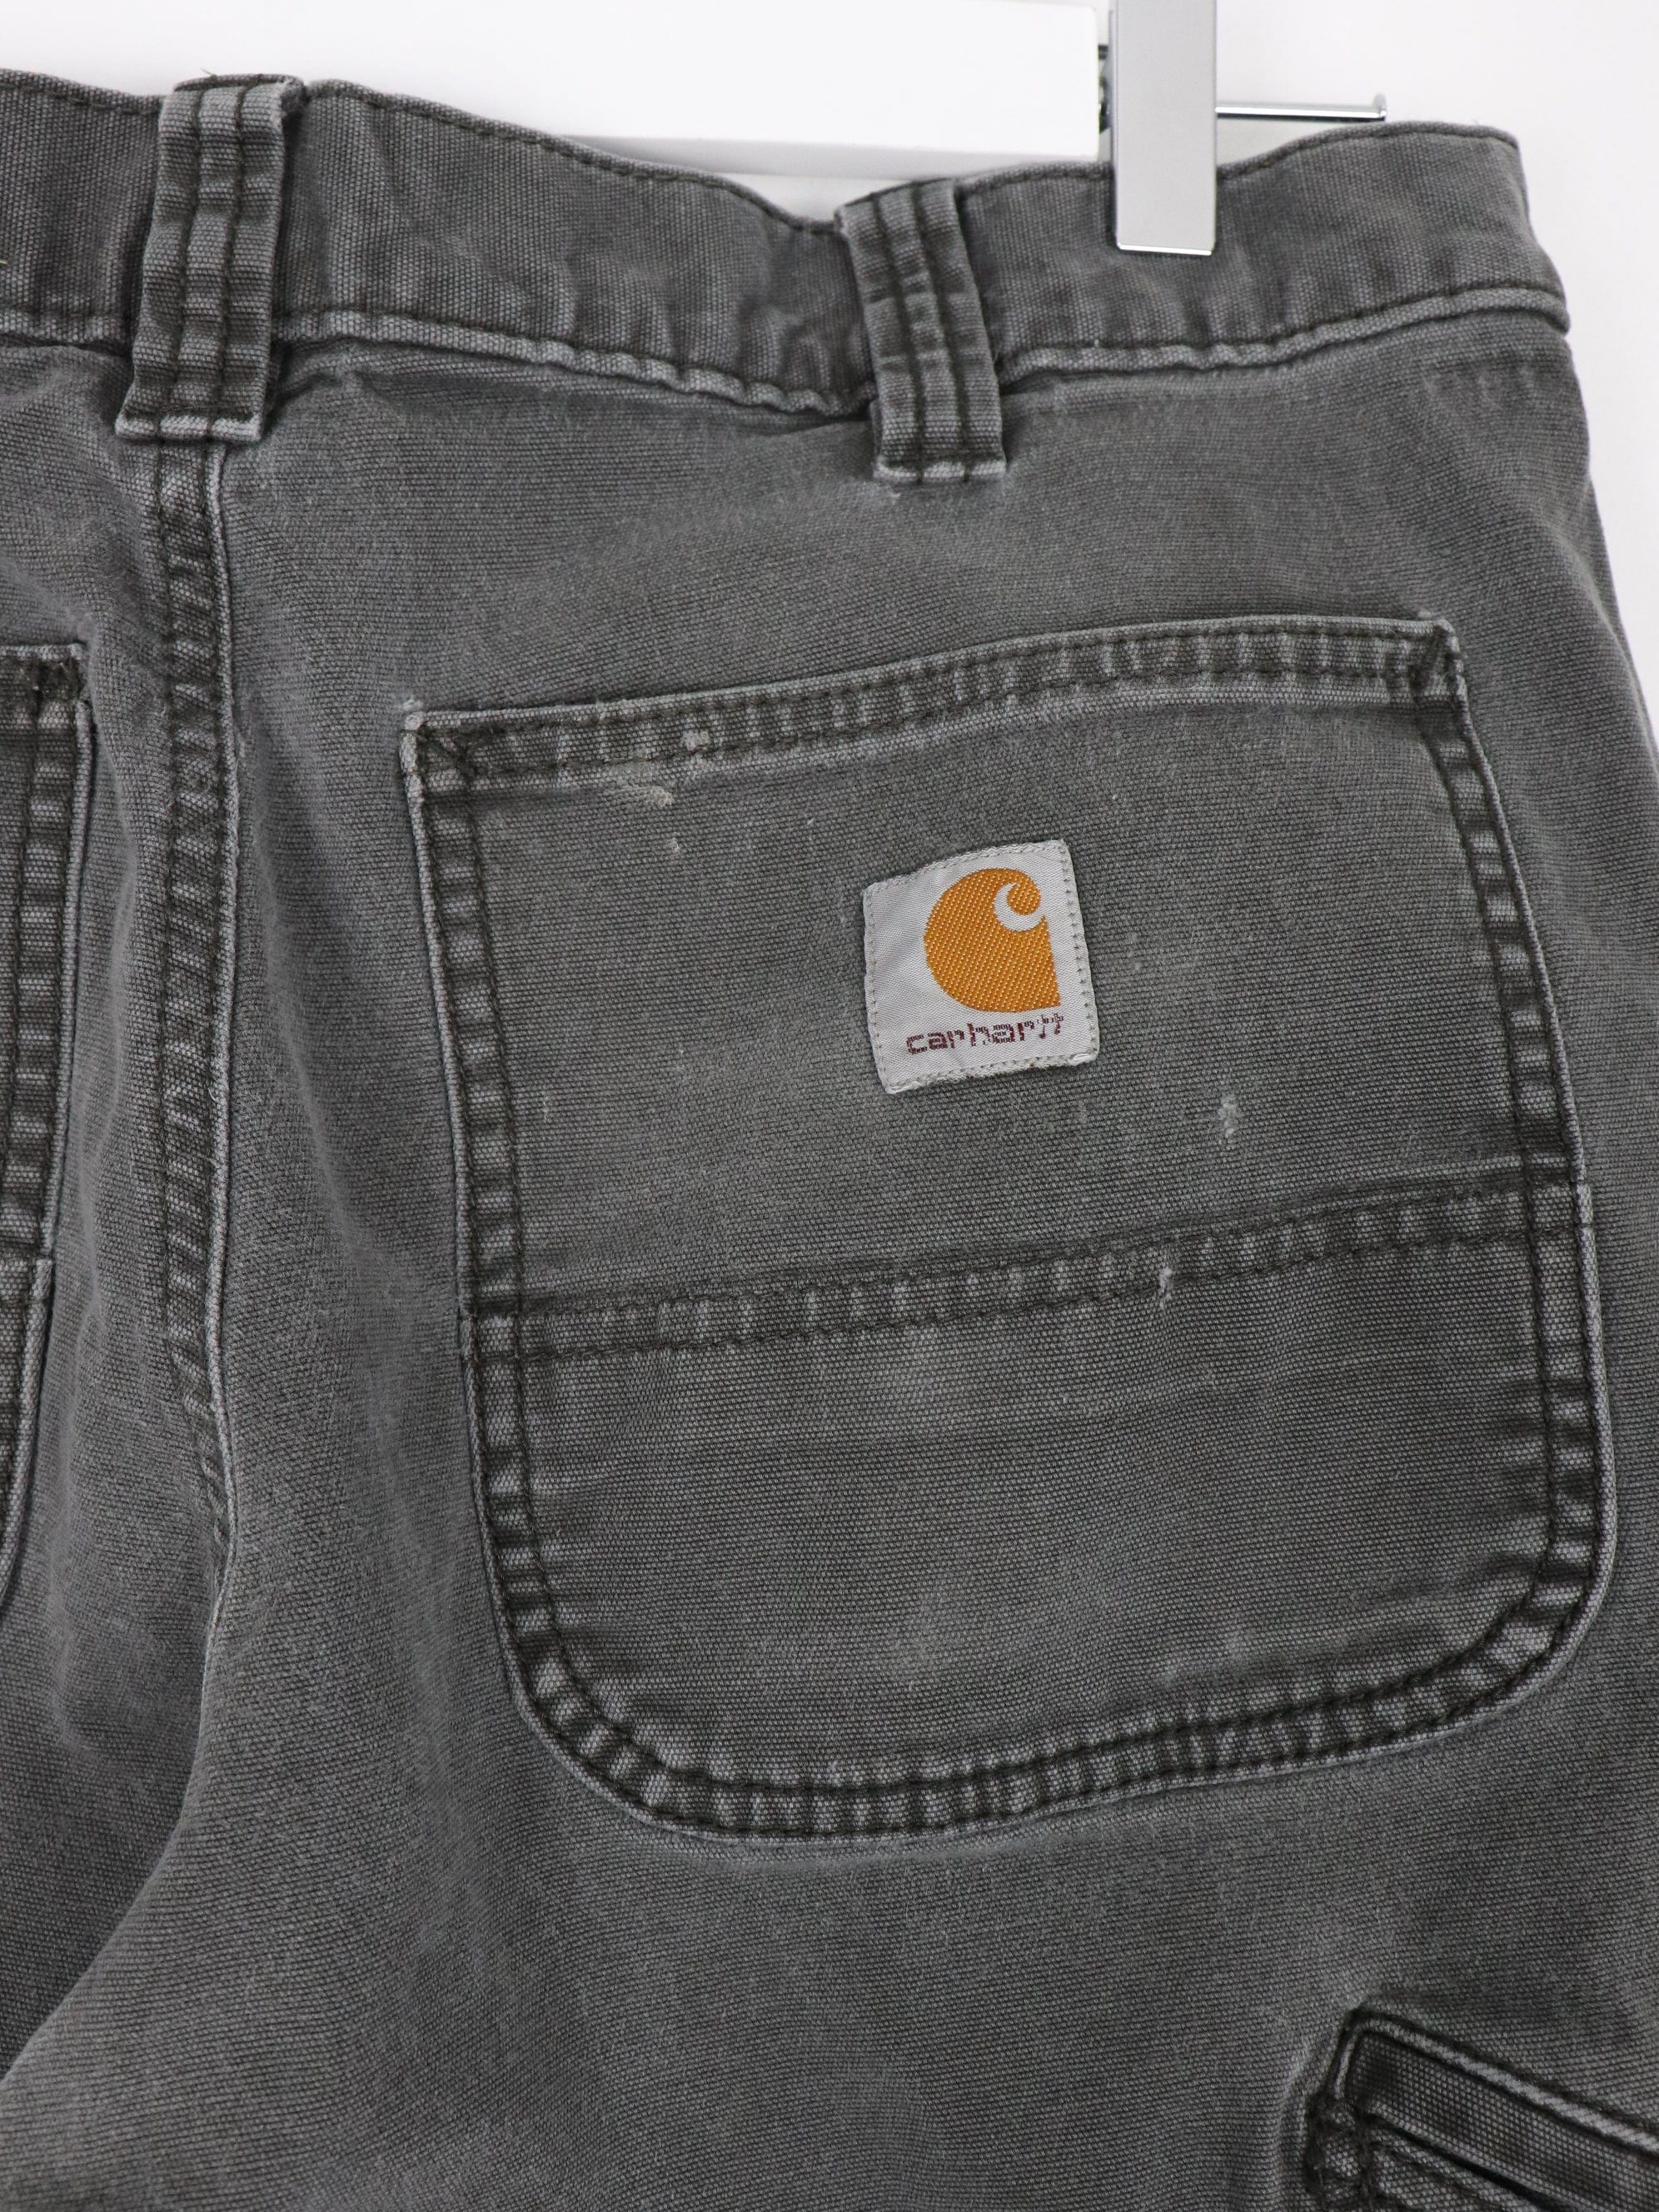 Carhartt Pants Fits Mens 32 x 28 Grey Work Wear Carpenters